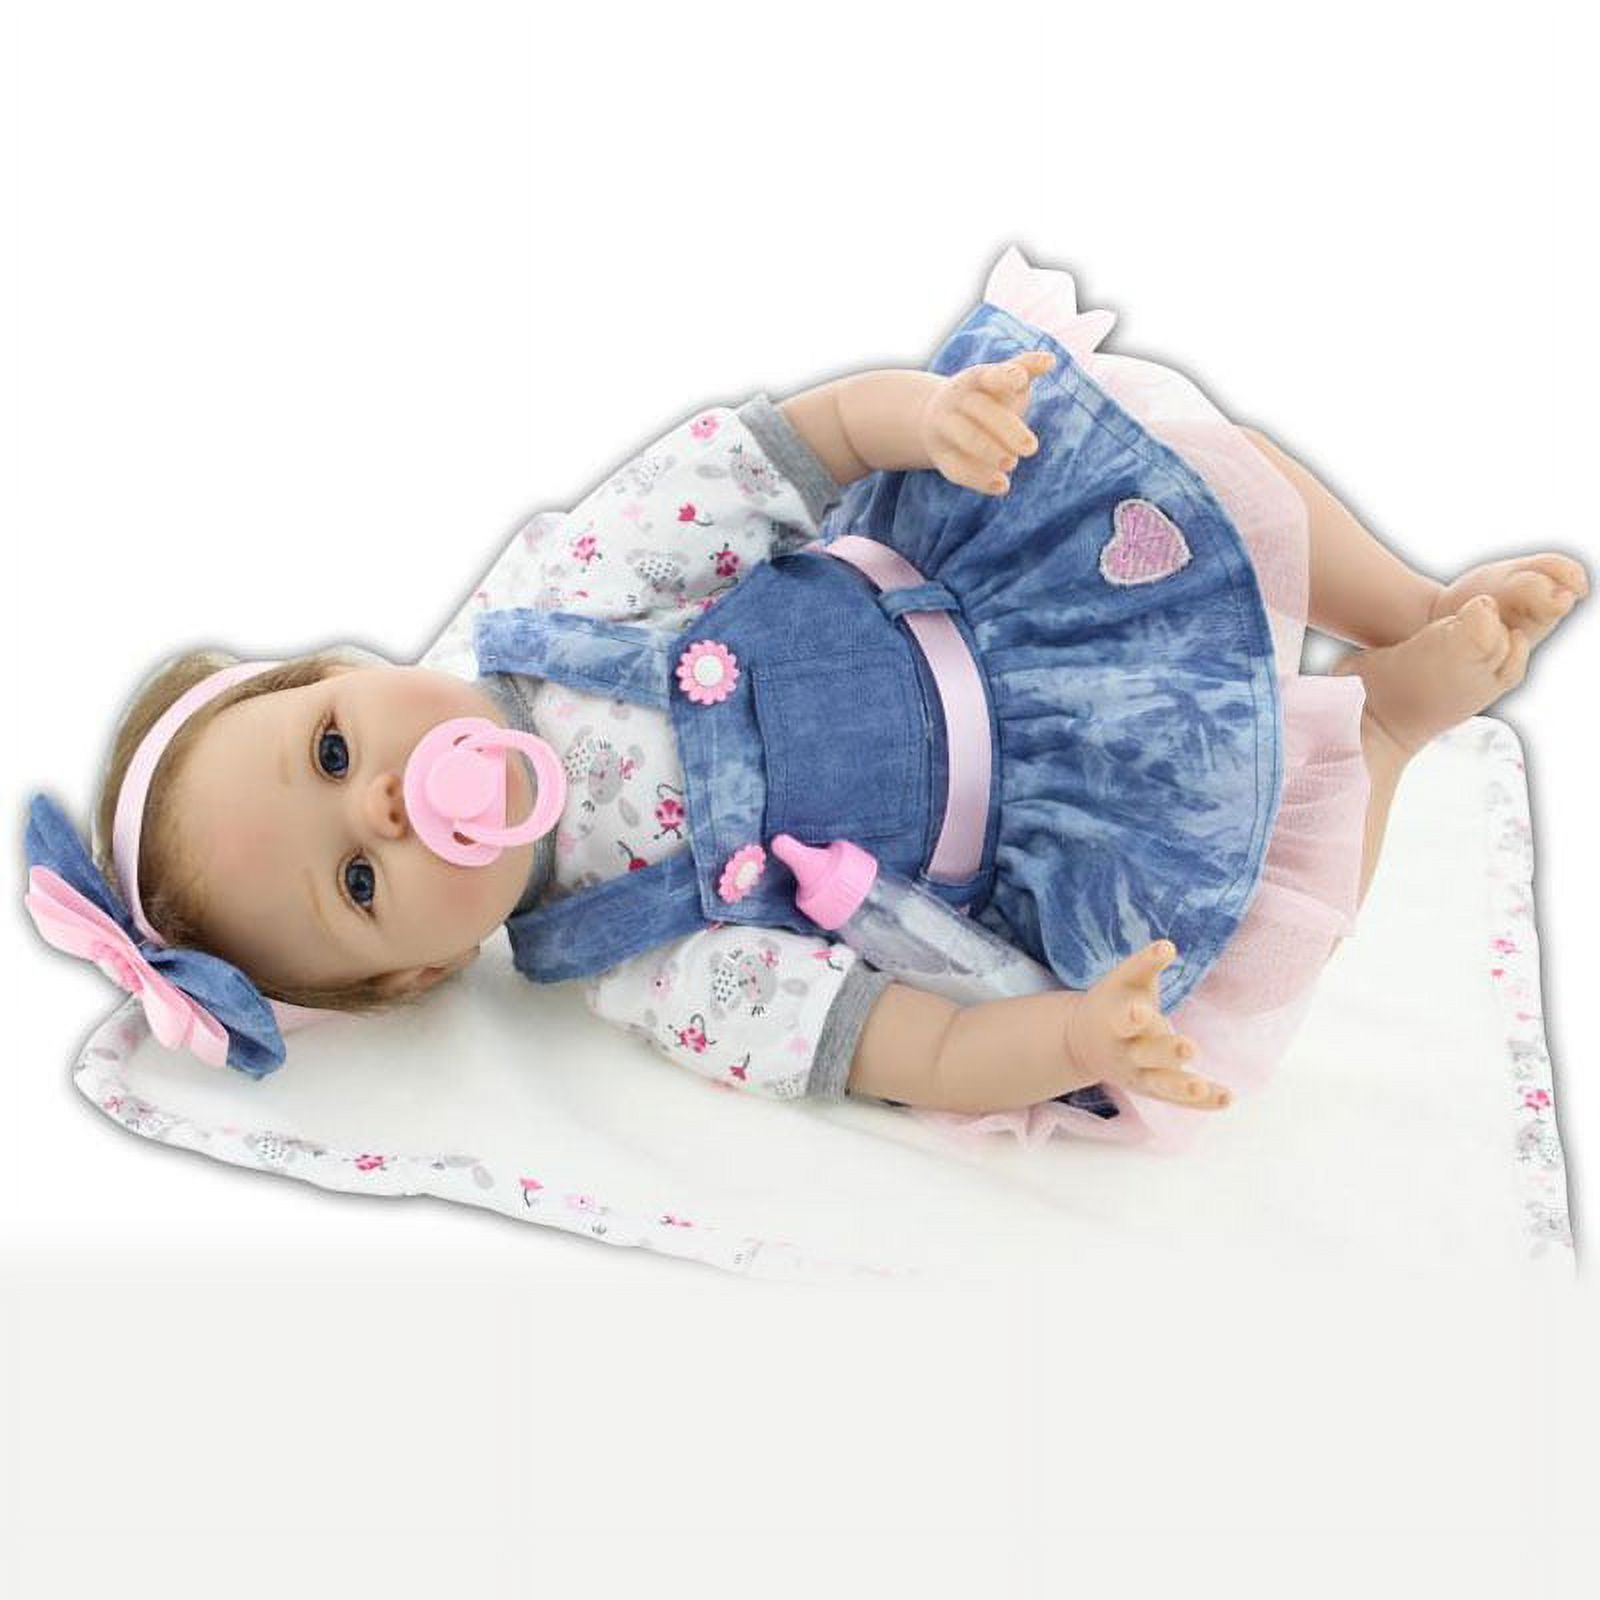 Zimtown Reborn Realistic Newborn Lifelike Vinyl Girl Baby Doll Playset, 3 Pieces - image 5 of 6